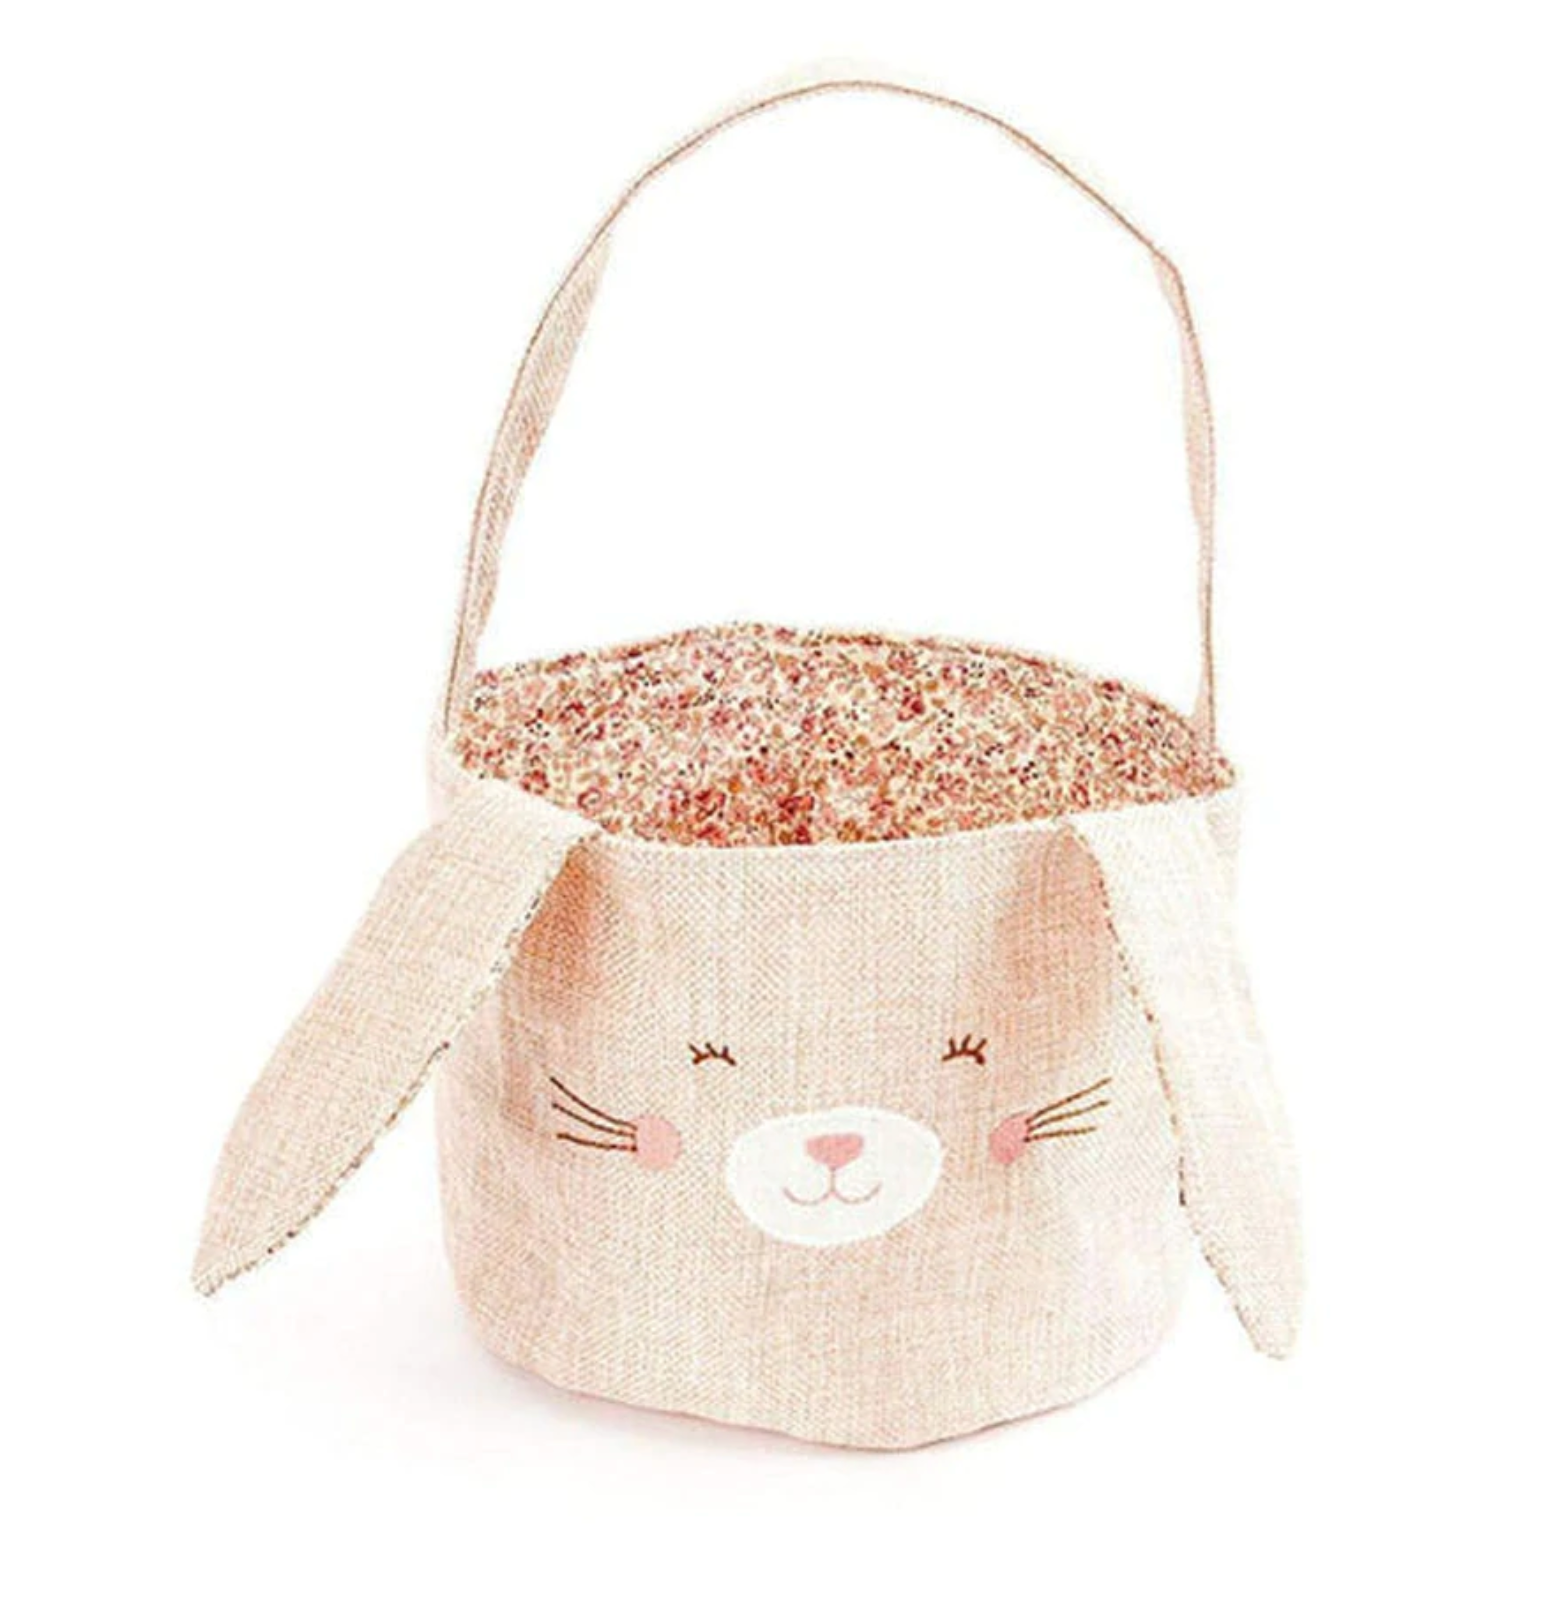 Linen Bunny Basket